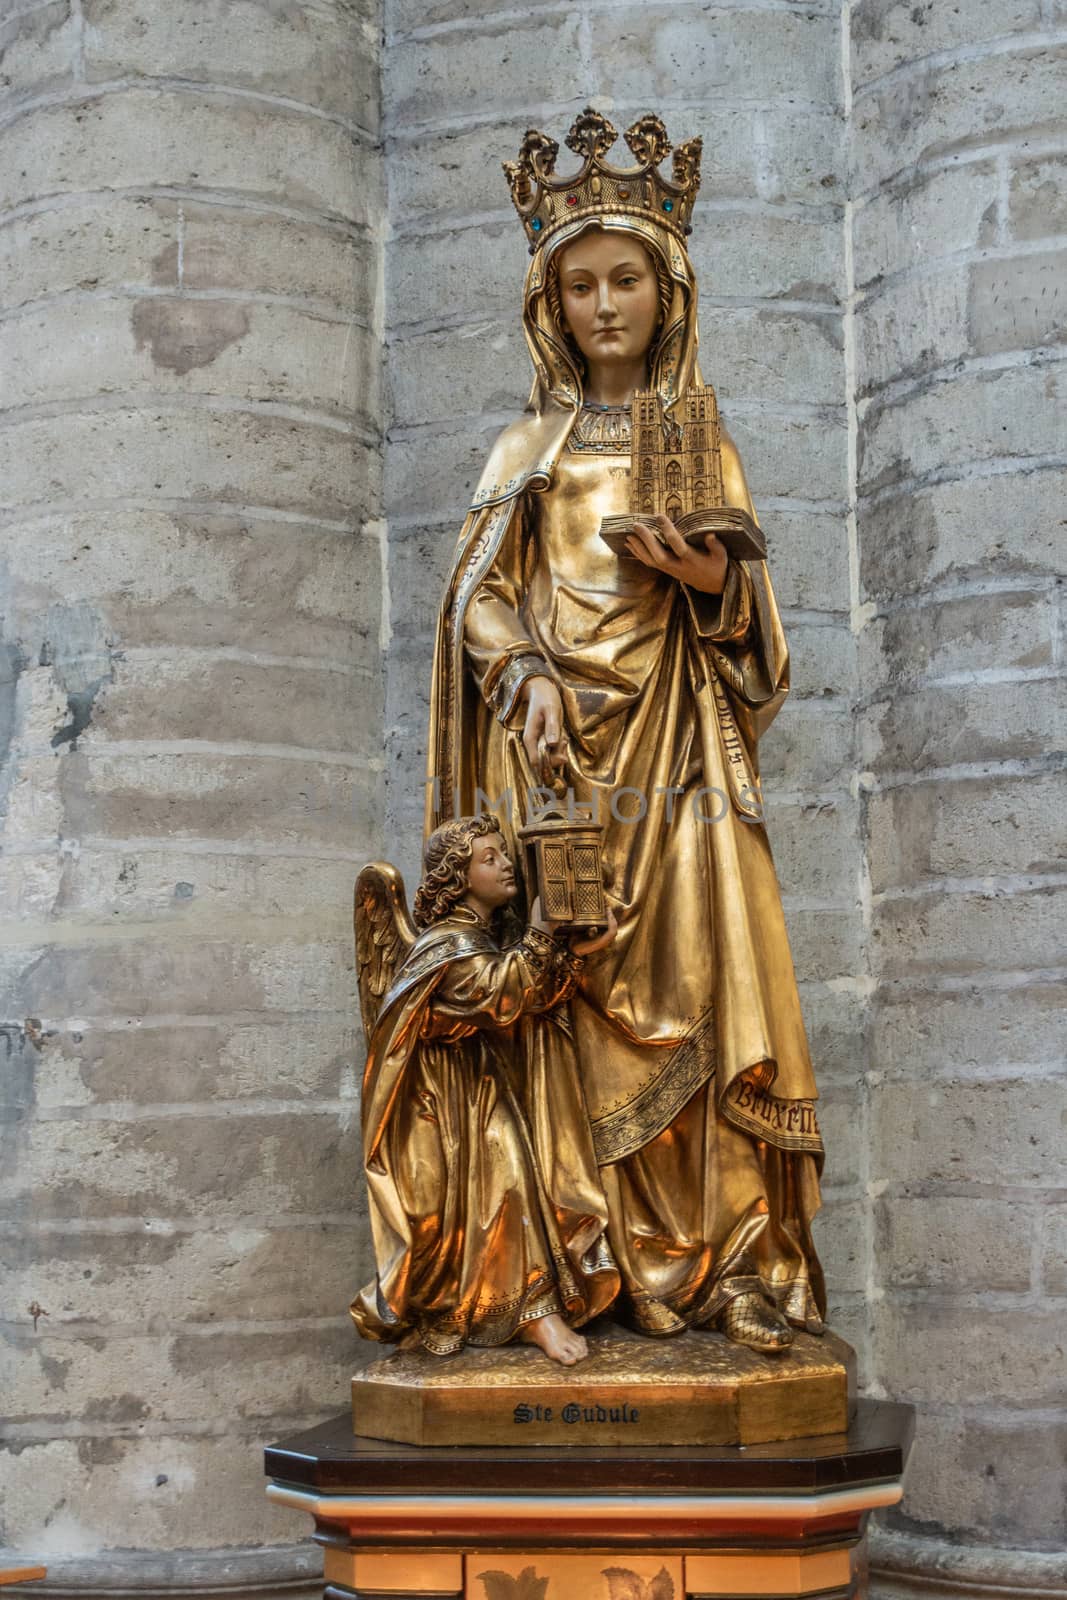 Brussels, Belgium - September 26, 2018: Closeup of Statue of Saint Gudula in Cathedral of Saint Michael and Saint Gudula against gray stone wall of pillar.